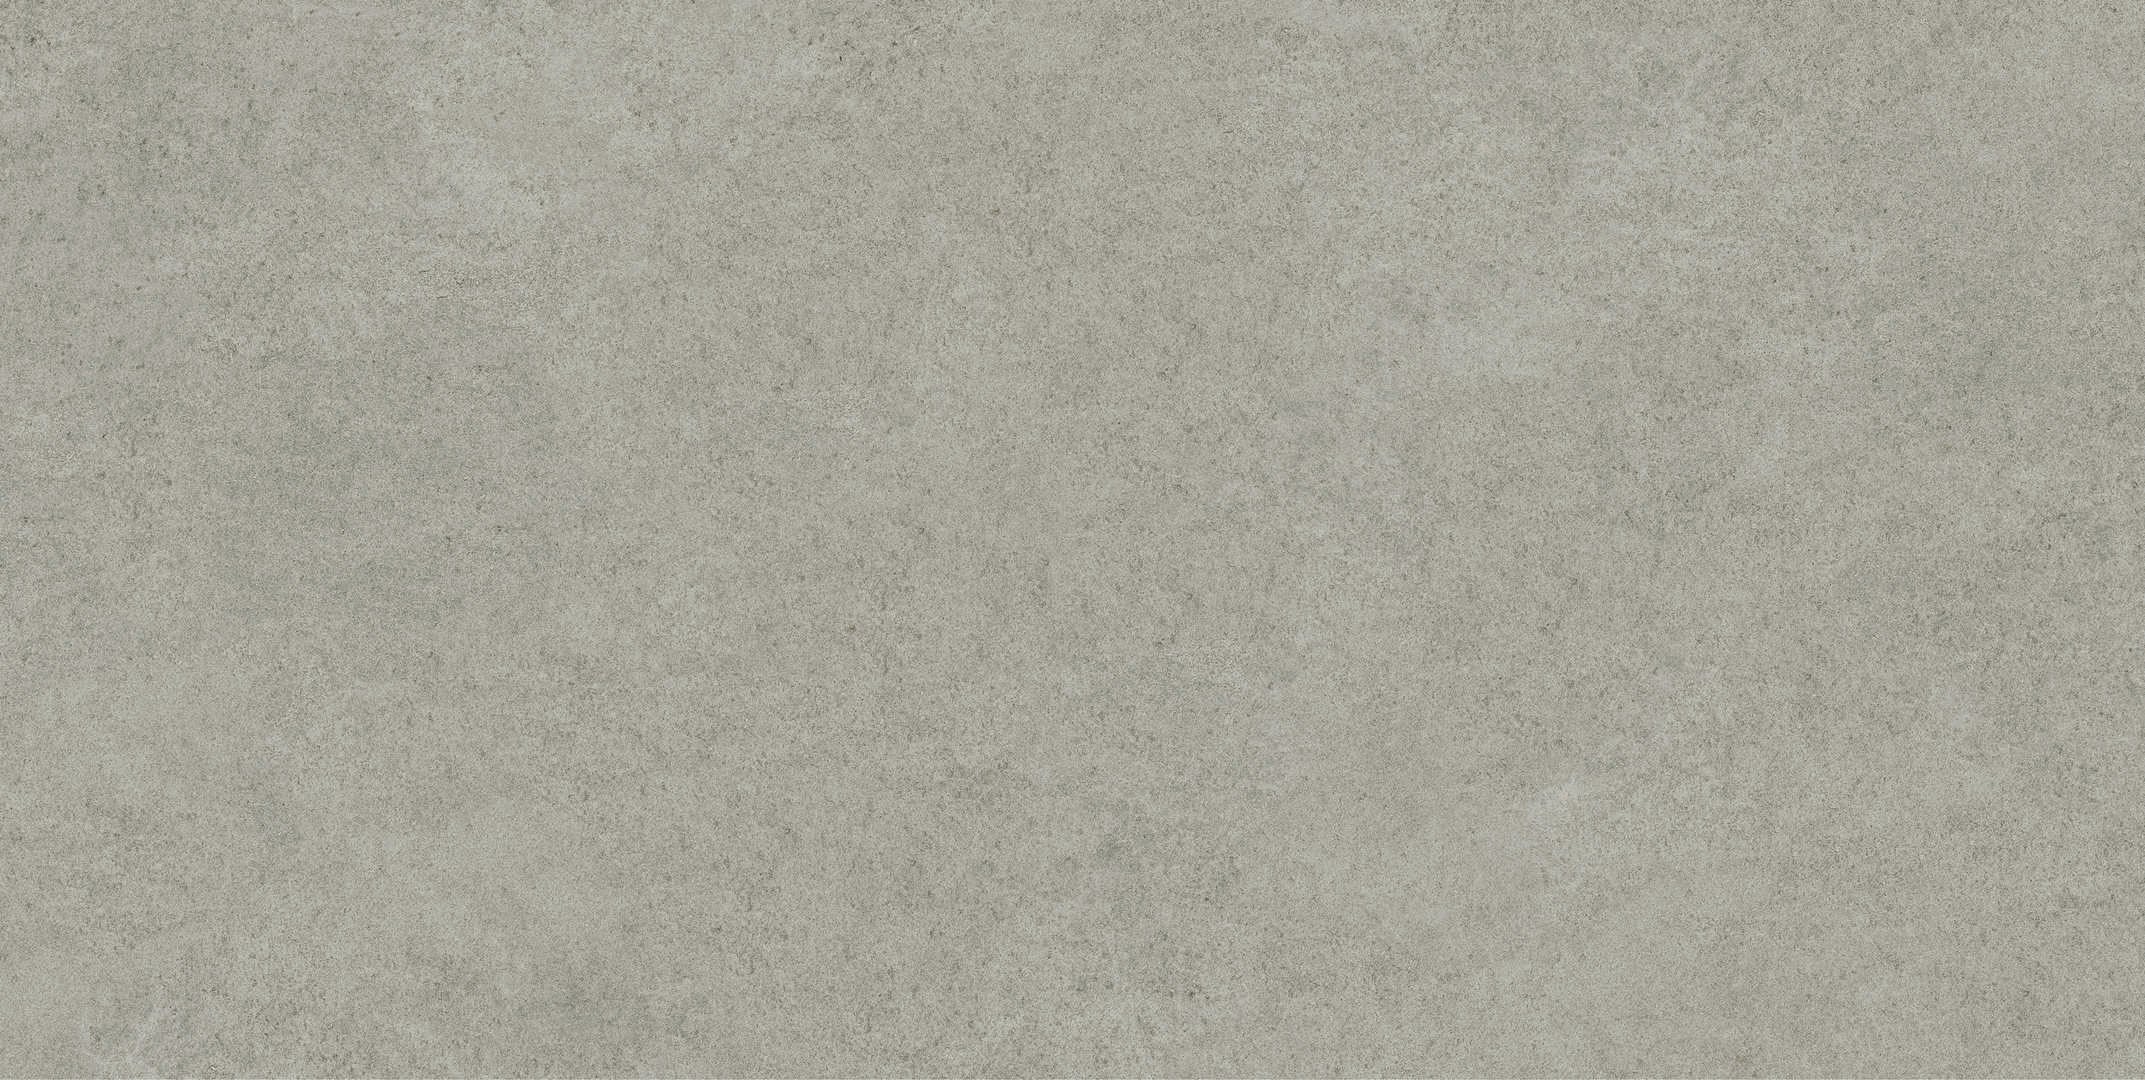 仿古磚 Rustic Tiles YM61016GBP 60x120cm 幹粒半拋 中國佛山瓷磚 China Foshan Tiles 地磚 Floor Tiles 牆磚 Wall Tiles